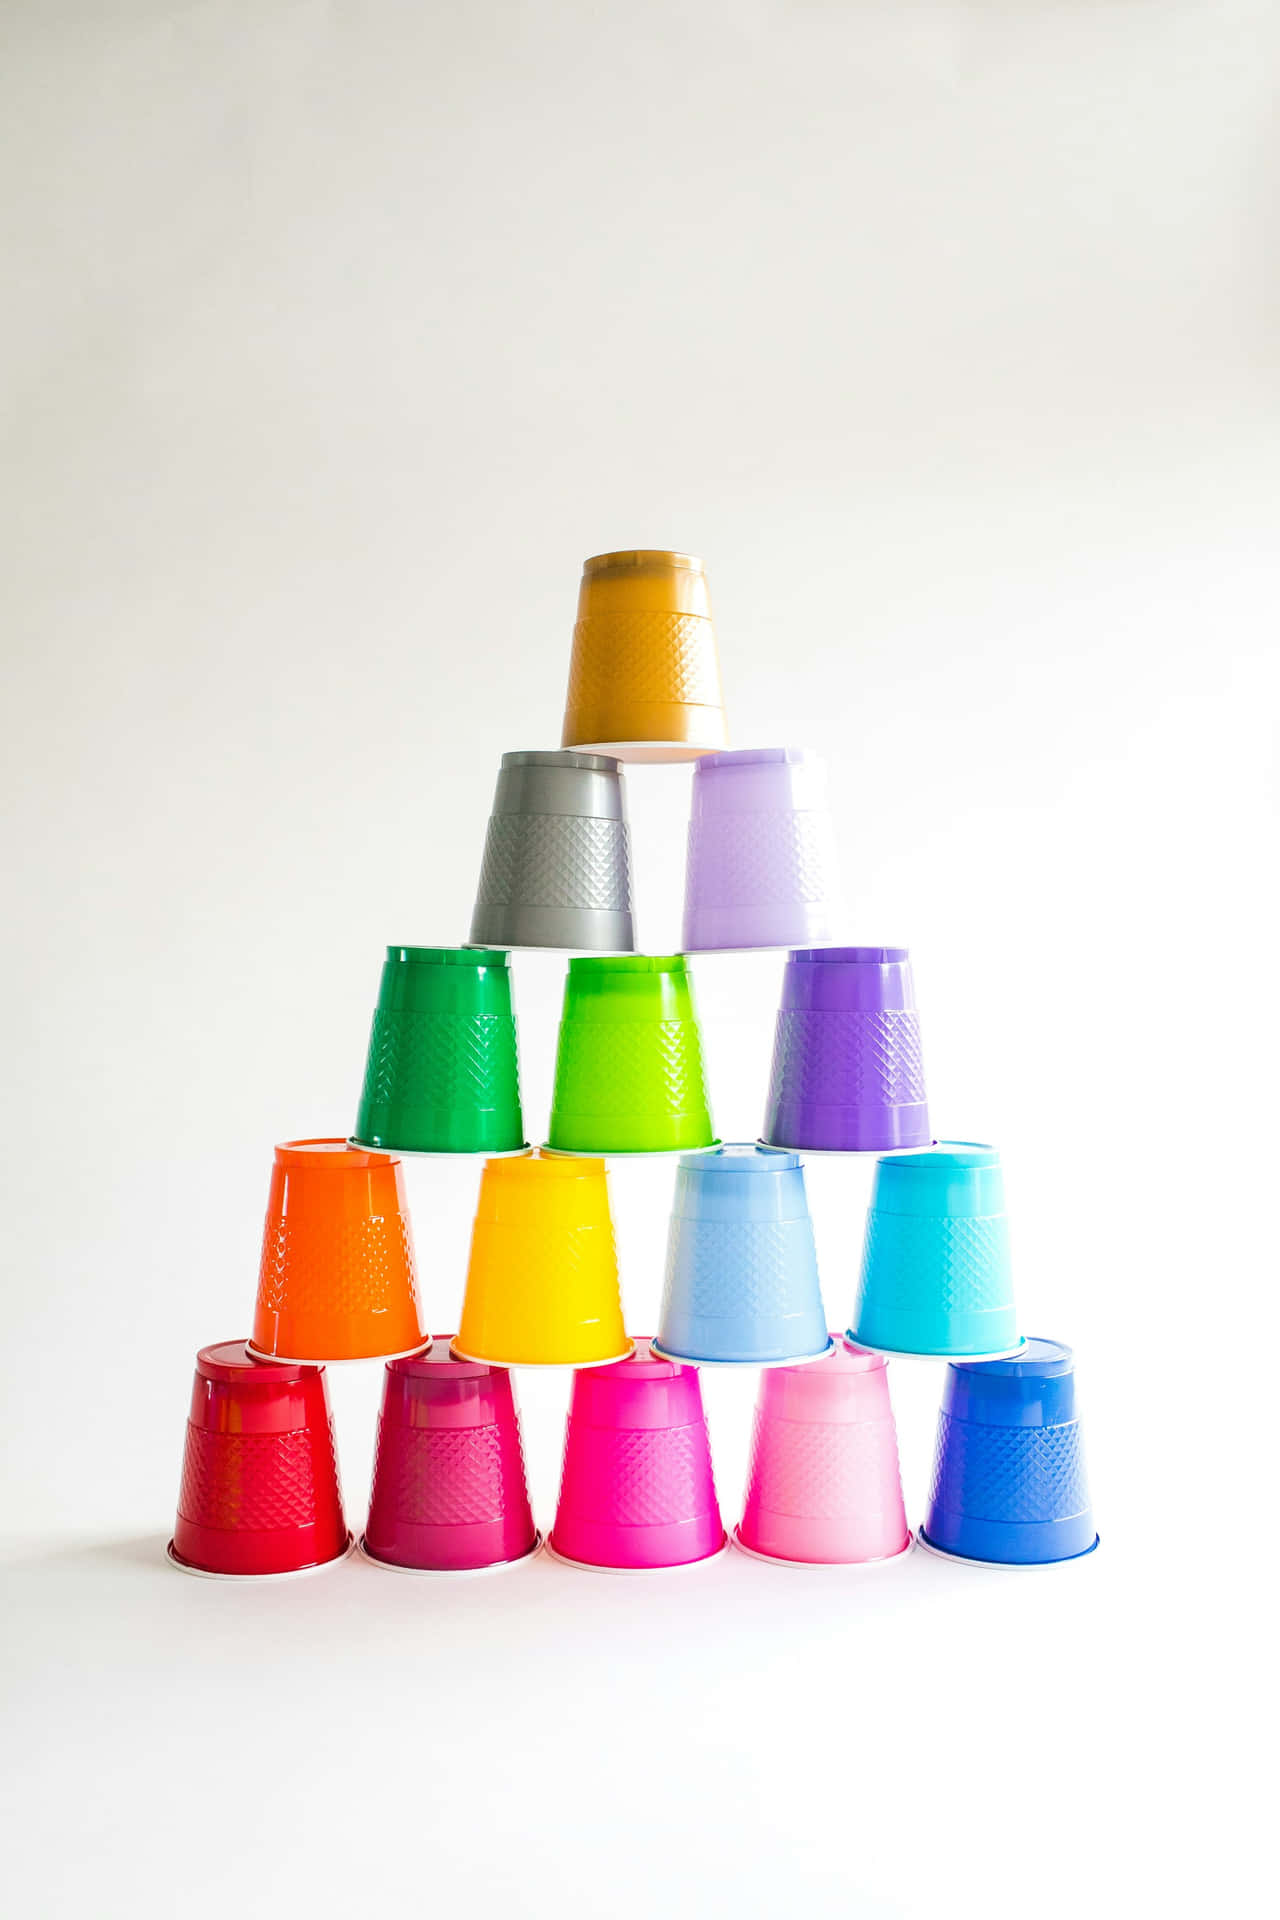 Colorful Plastic Cups Pyramid.jpg Wallpaper